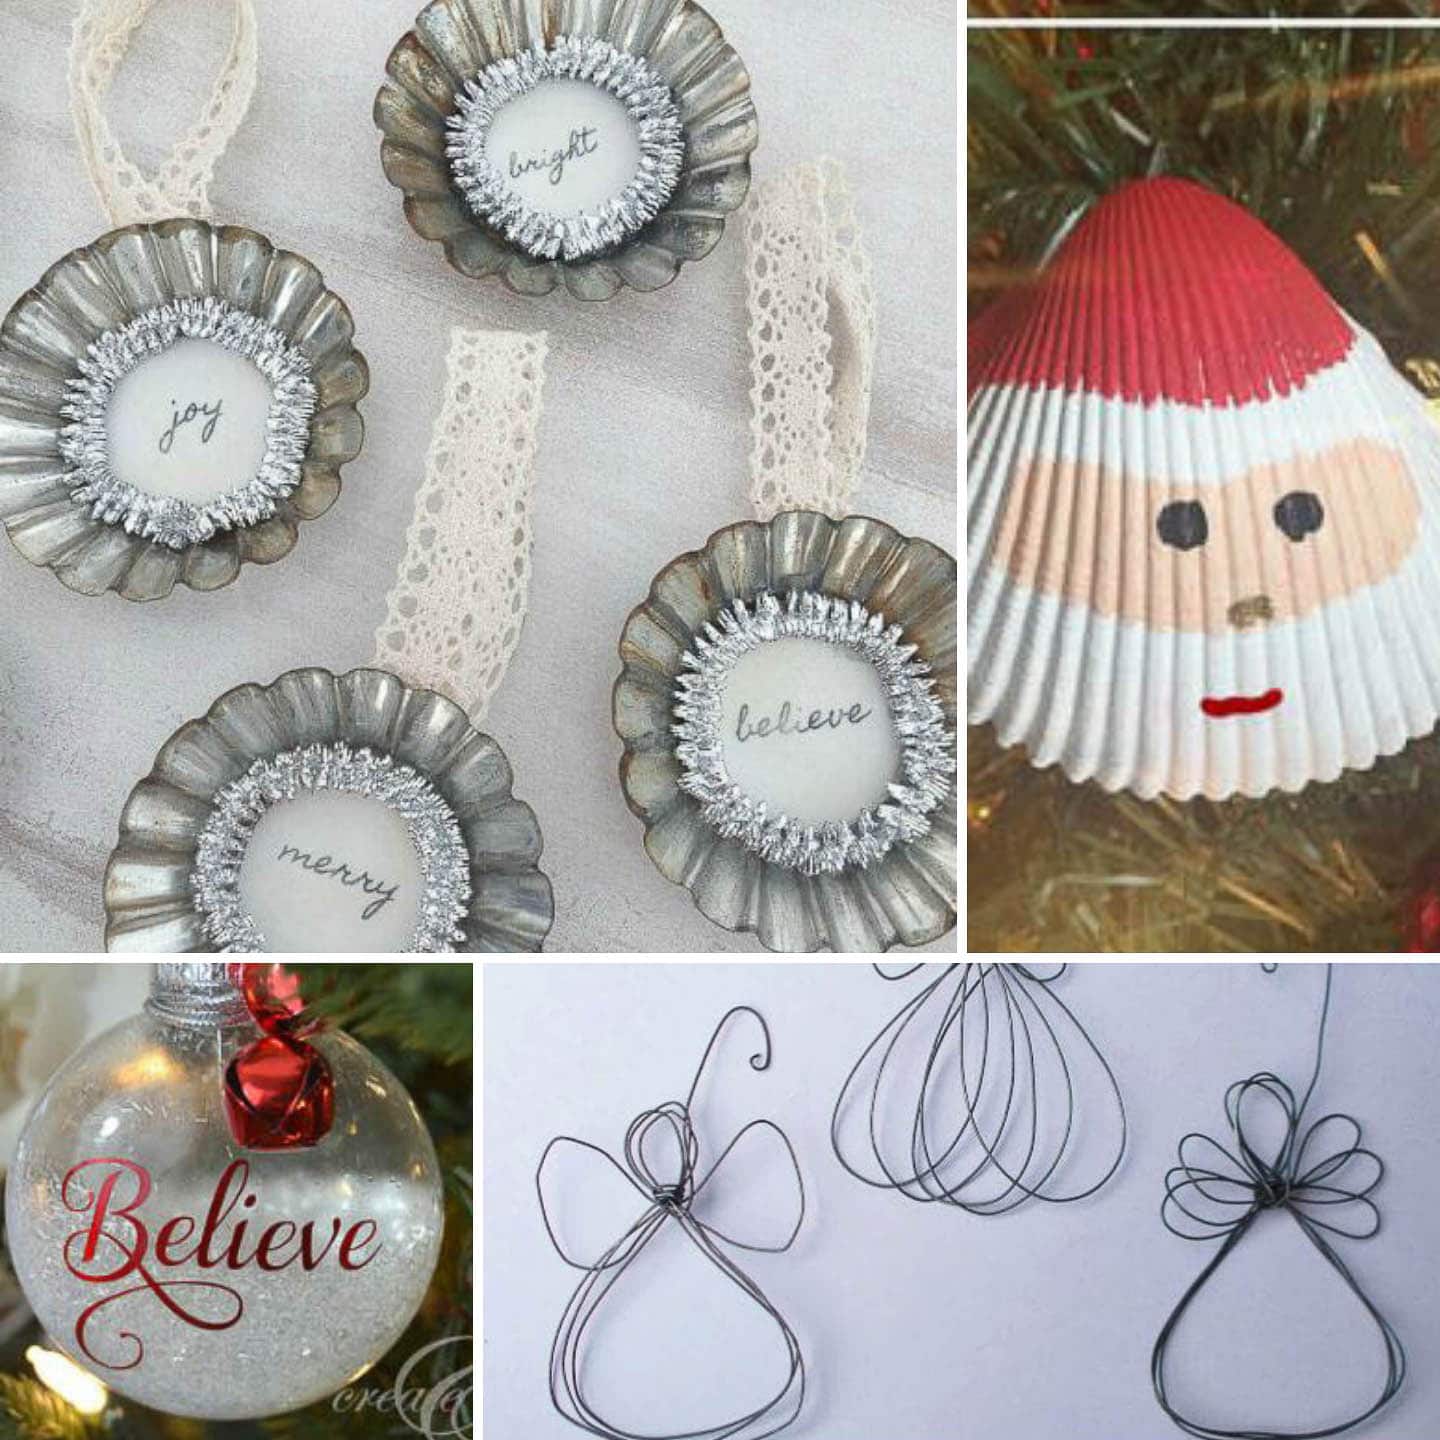 DIY Baking tin ornaments, Santa shell ornaments, DIY glitter Christmas ornaments, and wire angel ornaments